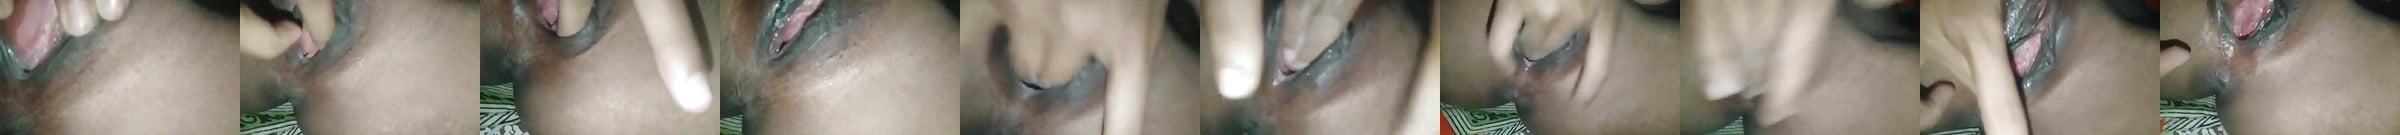 Featured Bangladeshi Webcam Girl Porn Videos Xhamster